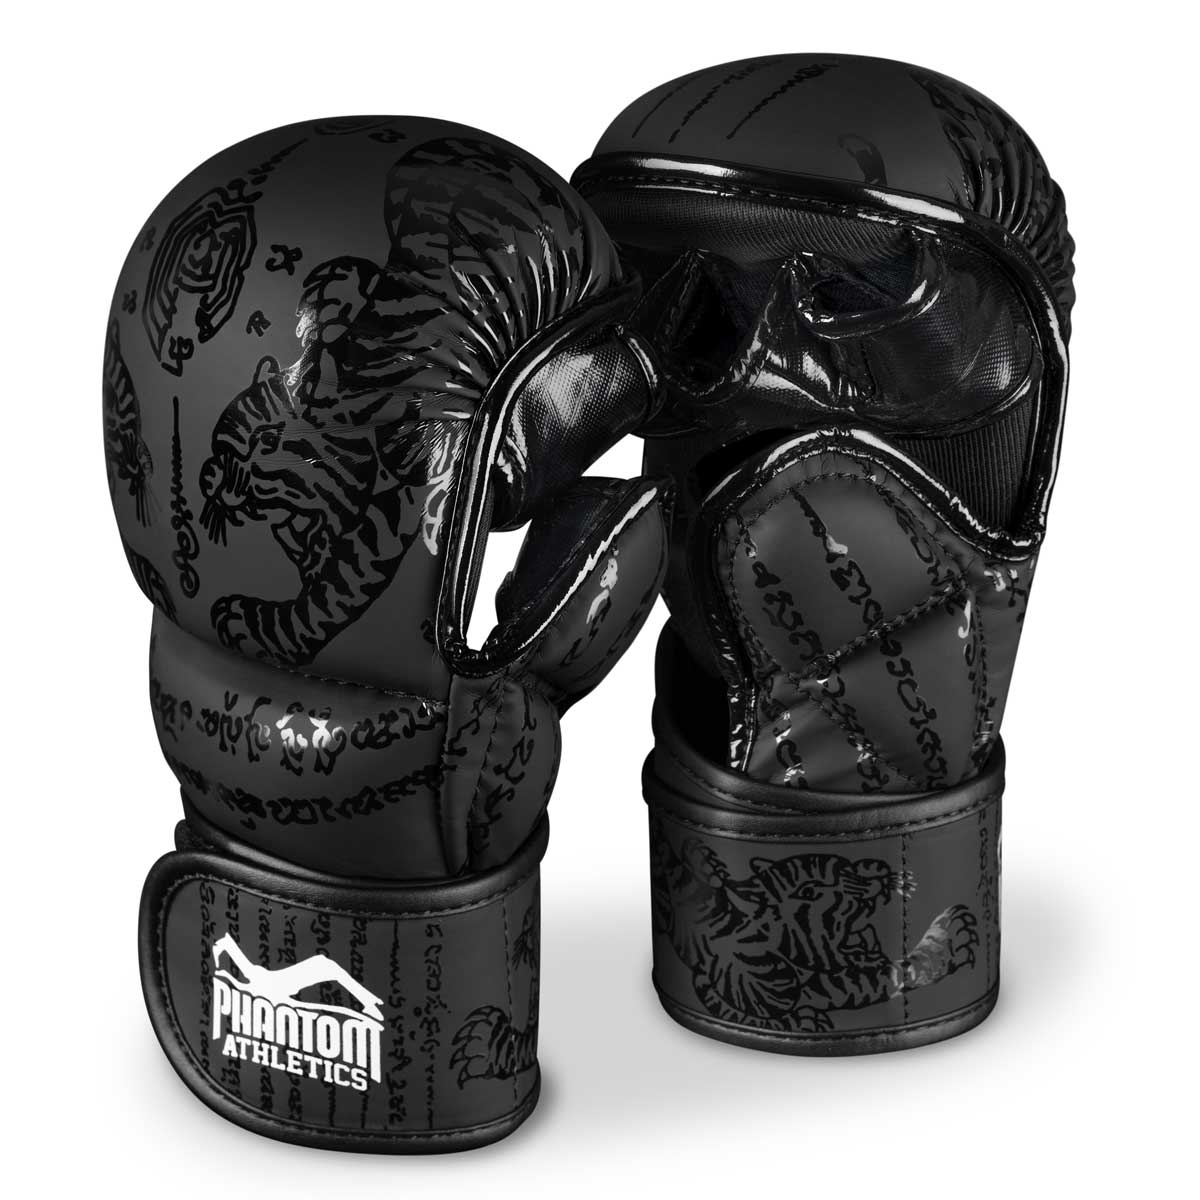 Dragon Kick-Boxing and Muay Thai Socks, Sporting Goods, Sporting Good